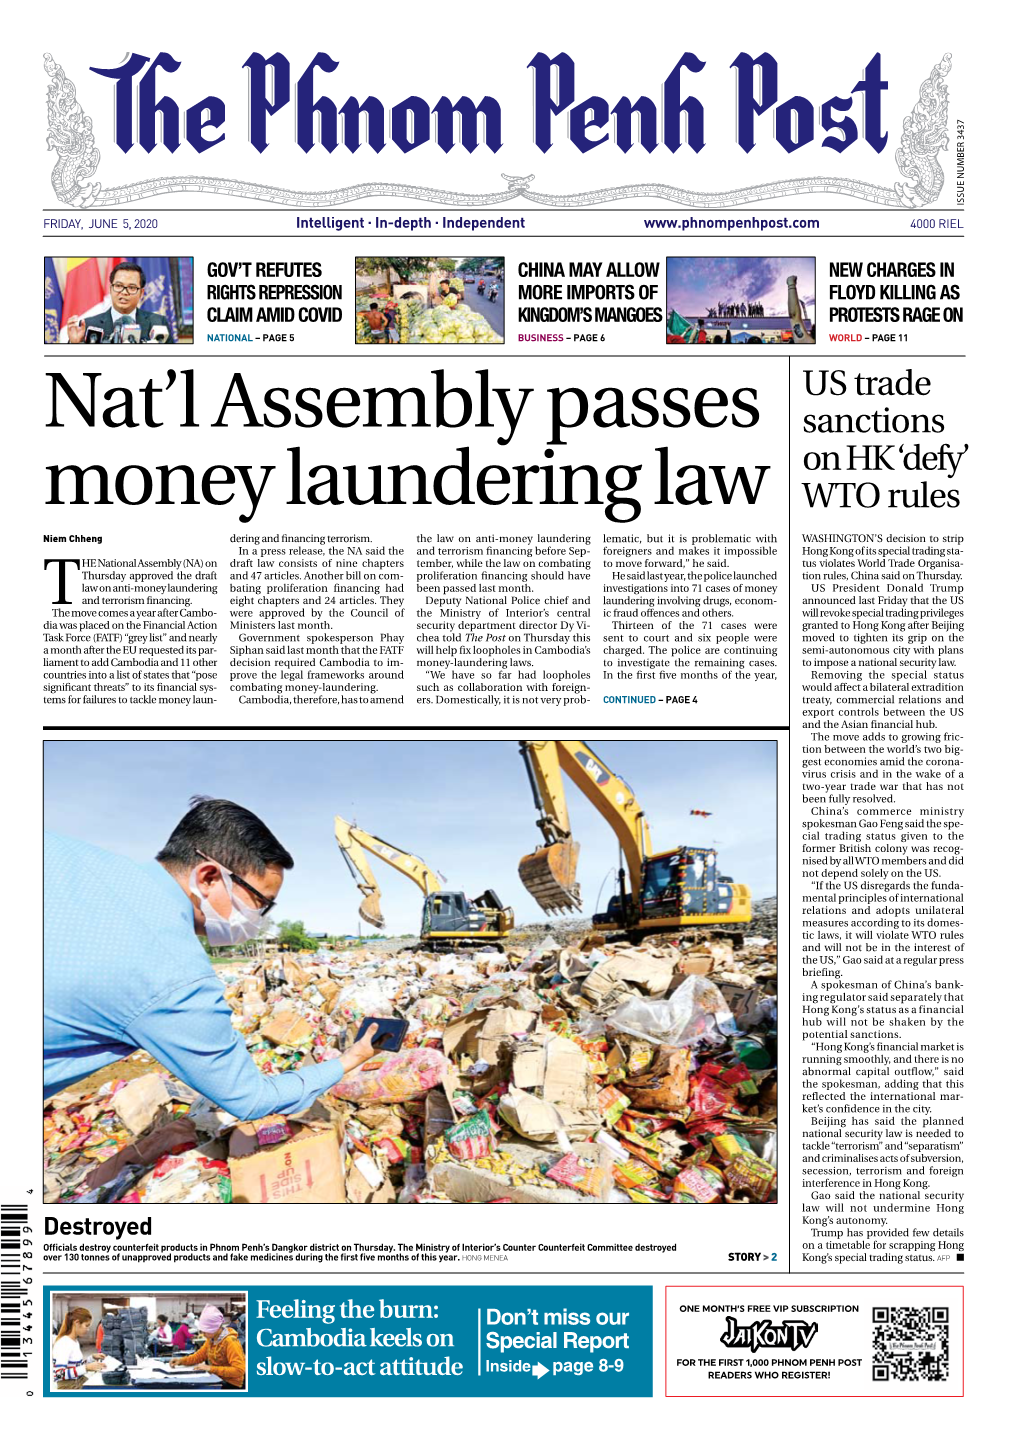 Nat'l Assembly Passes Money Laundering